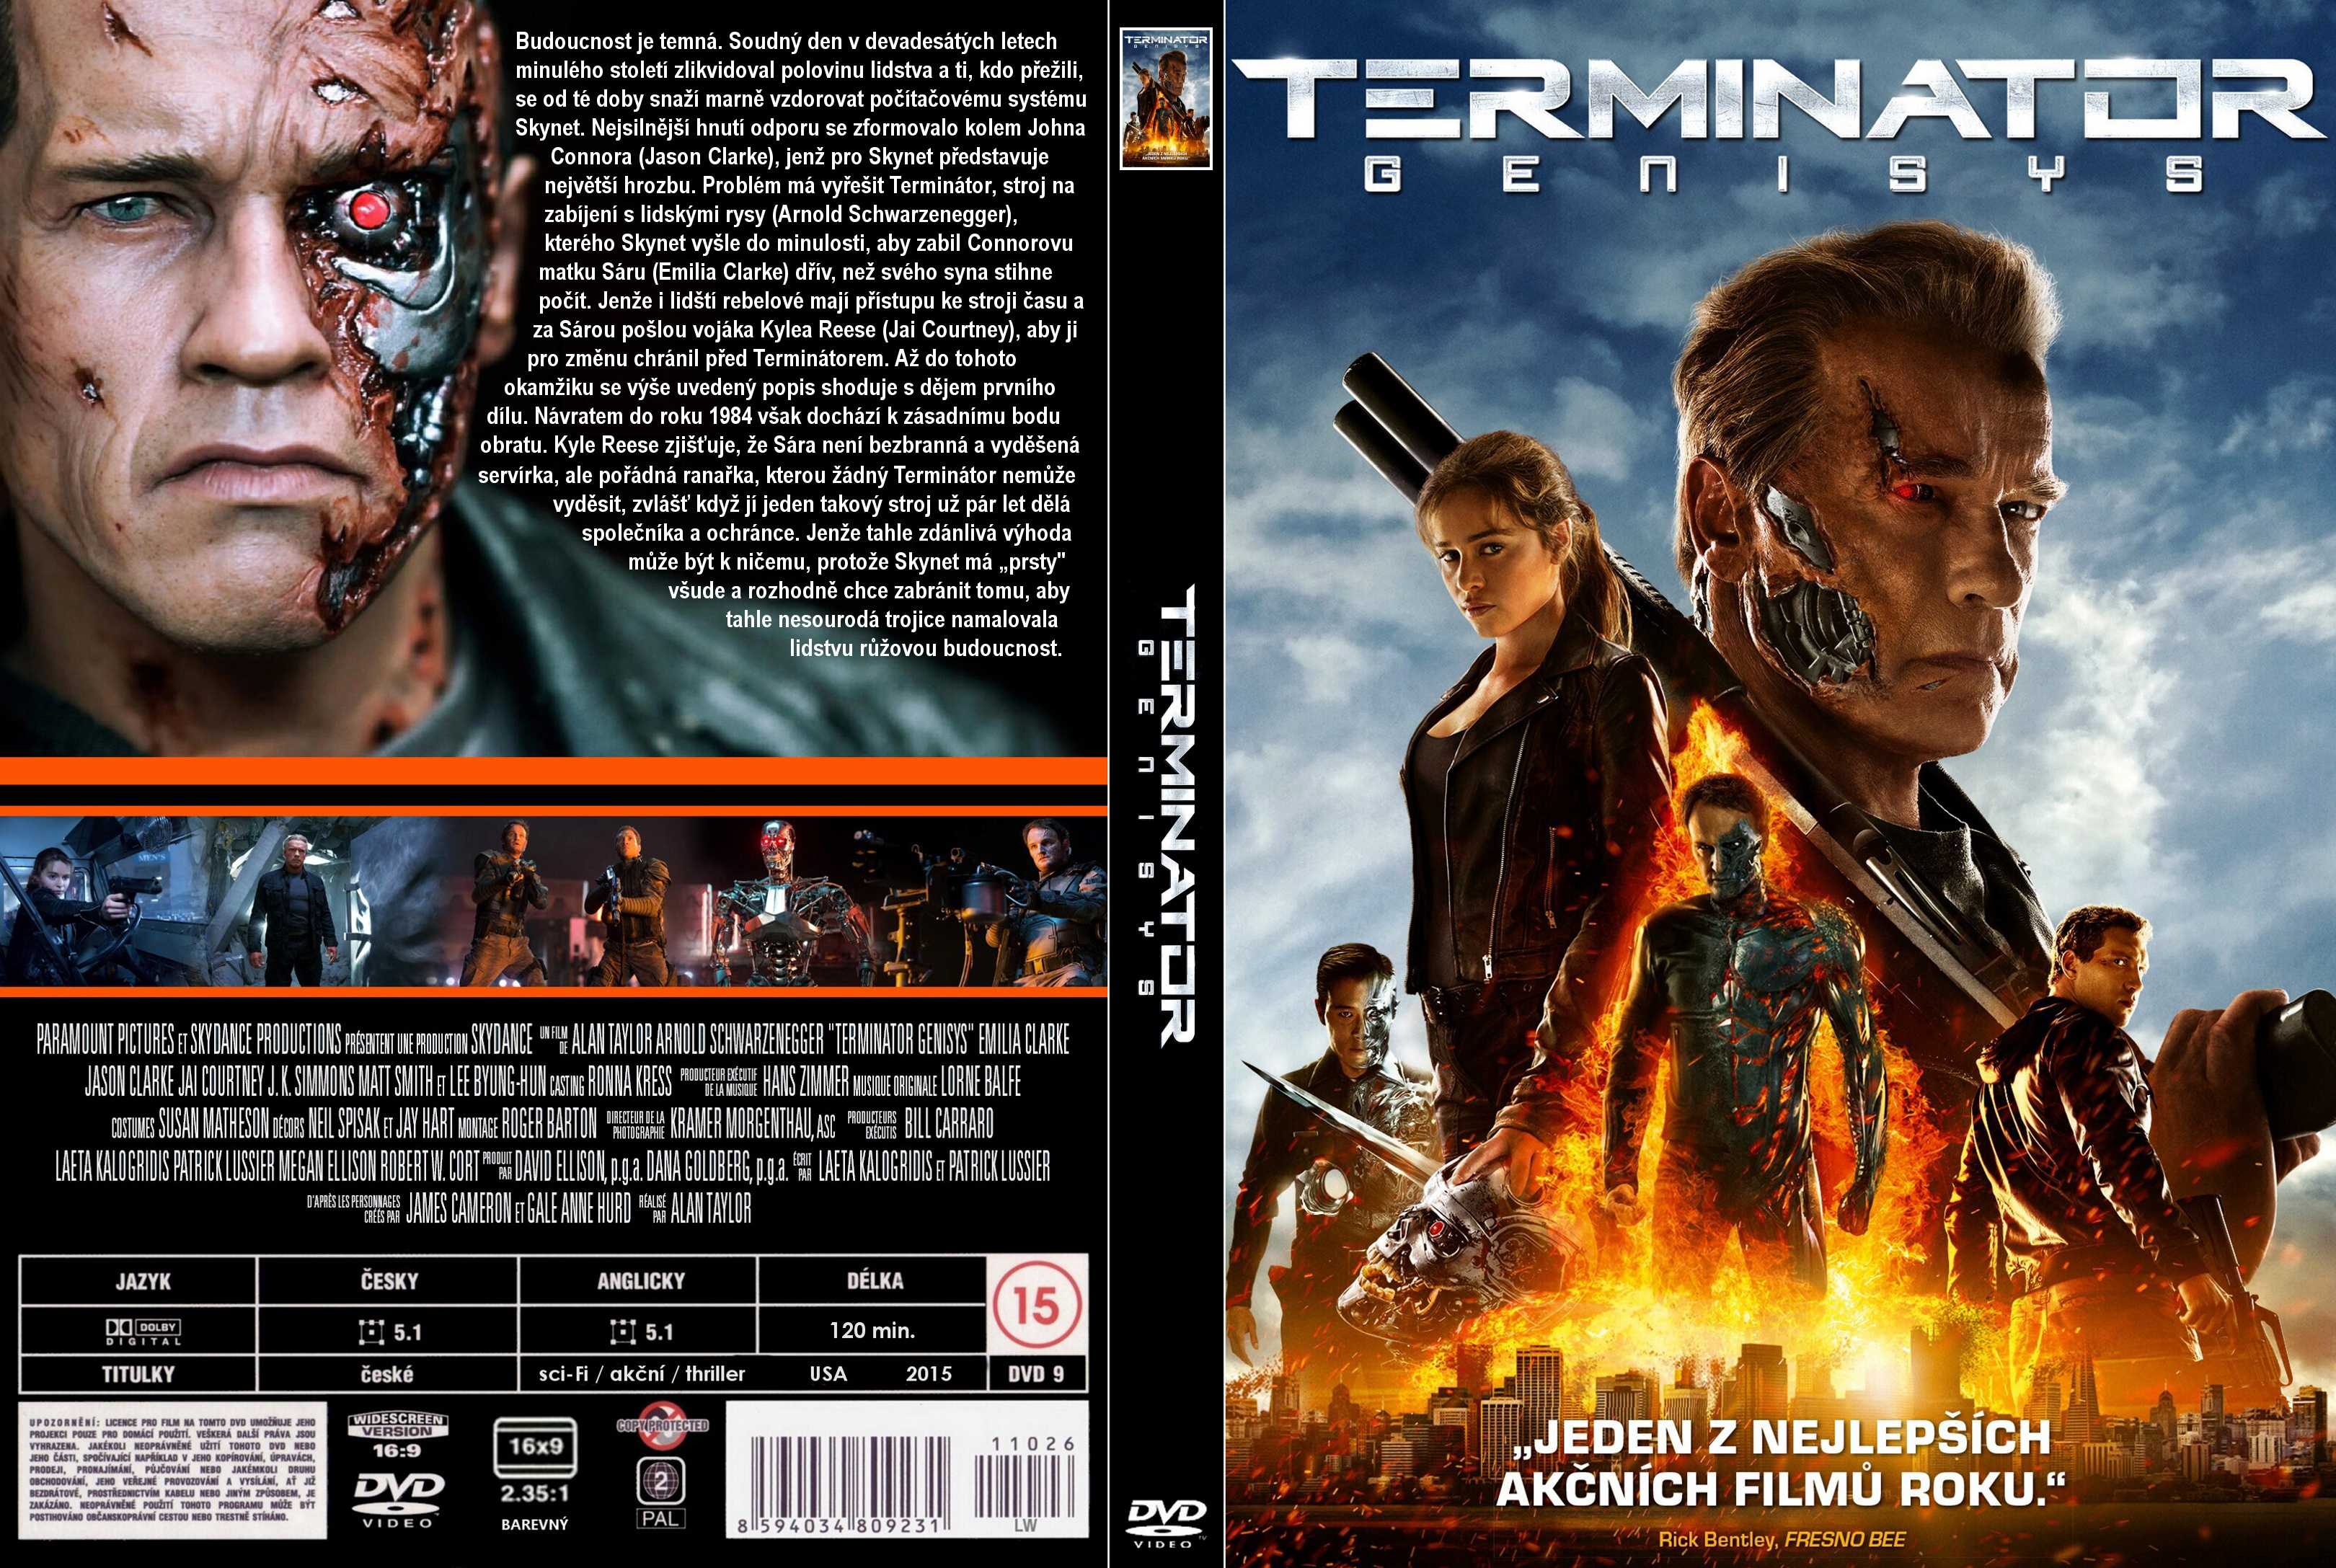 Terminator v. Терминатор Генезис - Terminator Genisys (2015. Терминатор Генезис 2015 DVD обложка. Terminator Genesis Blu ray. Terminator Genisys 2015 DVD Cover.